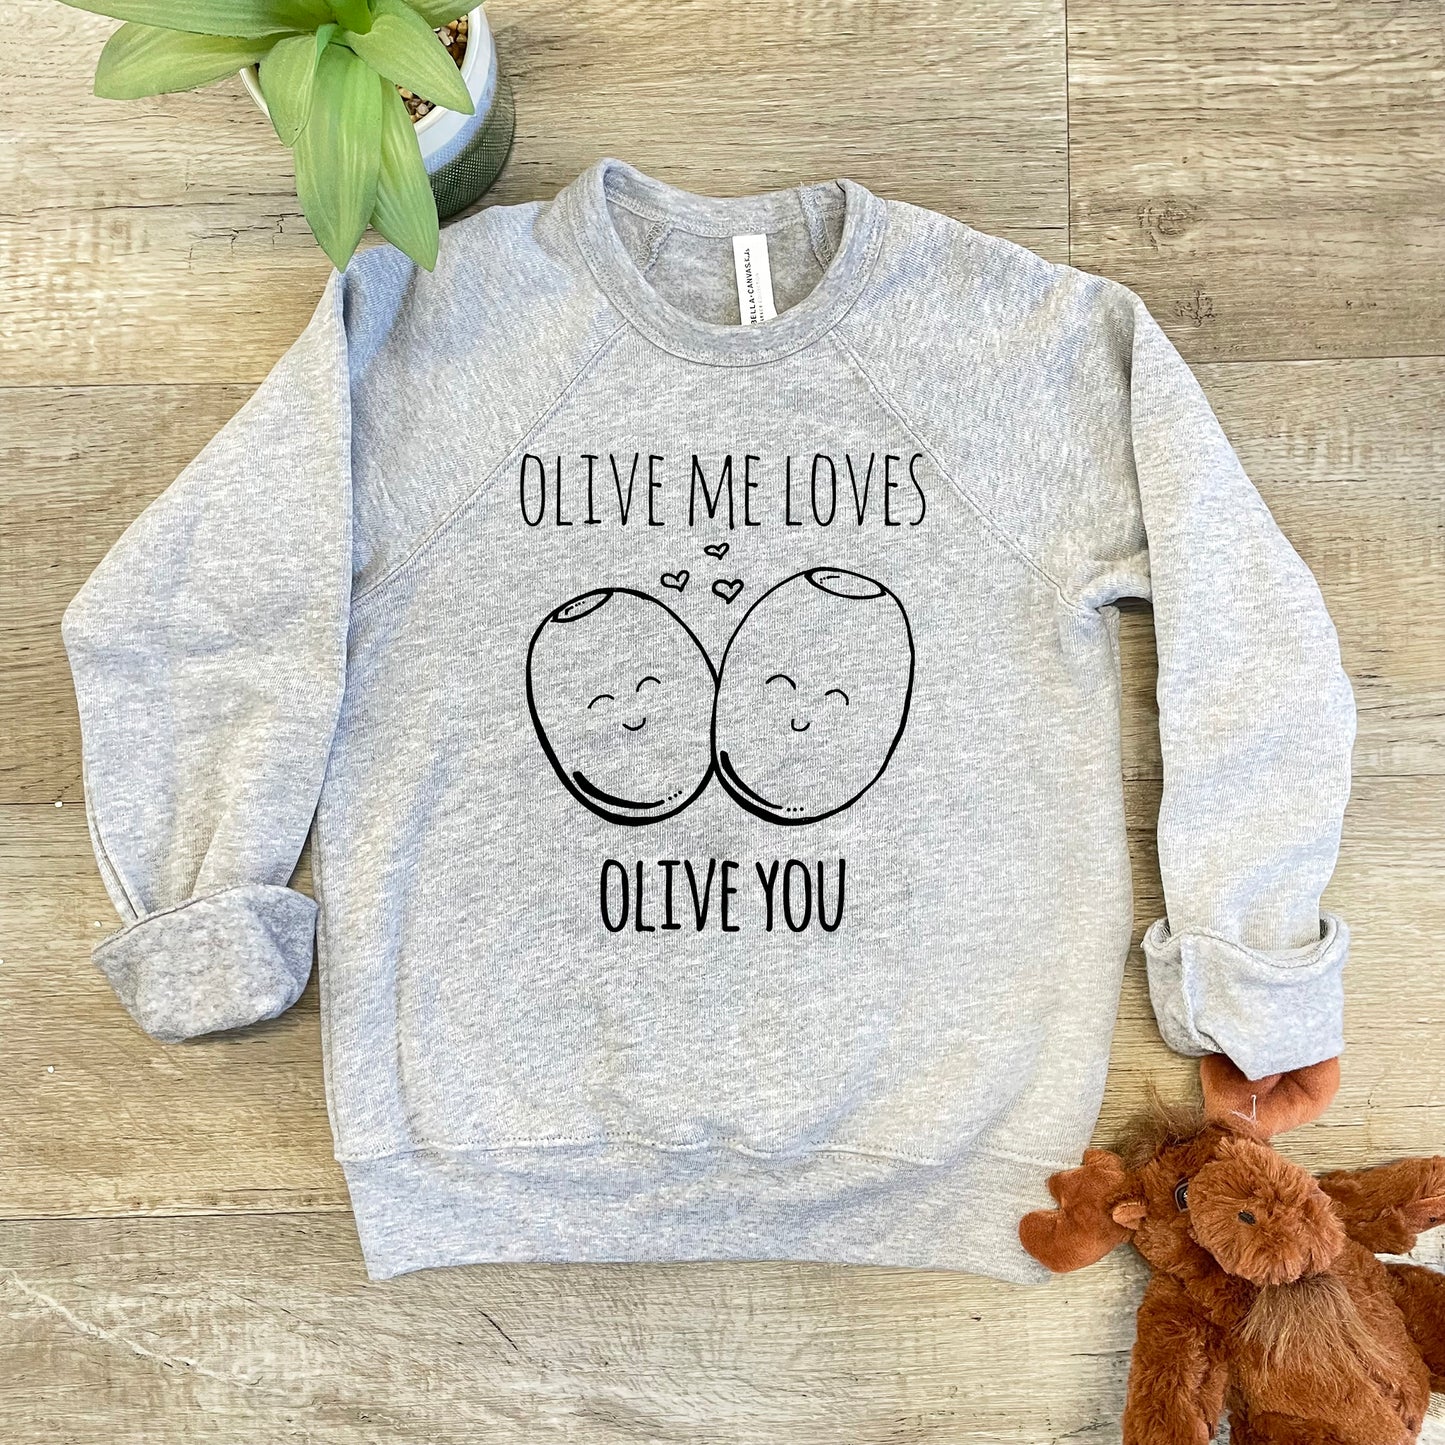 Olive Me Loves Olive You - Kid's Sweatshirt - Heather Gray or Mauve